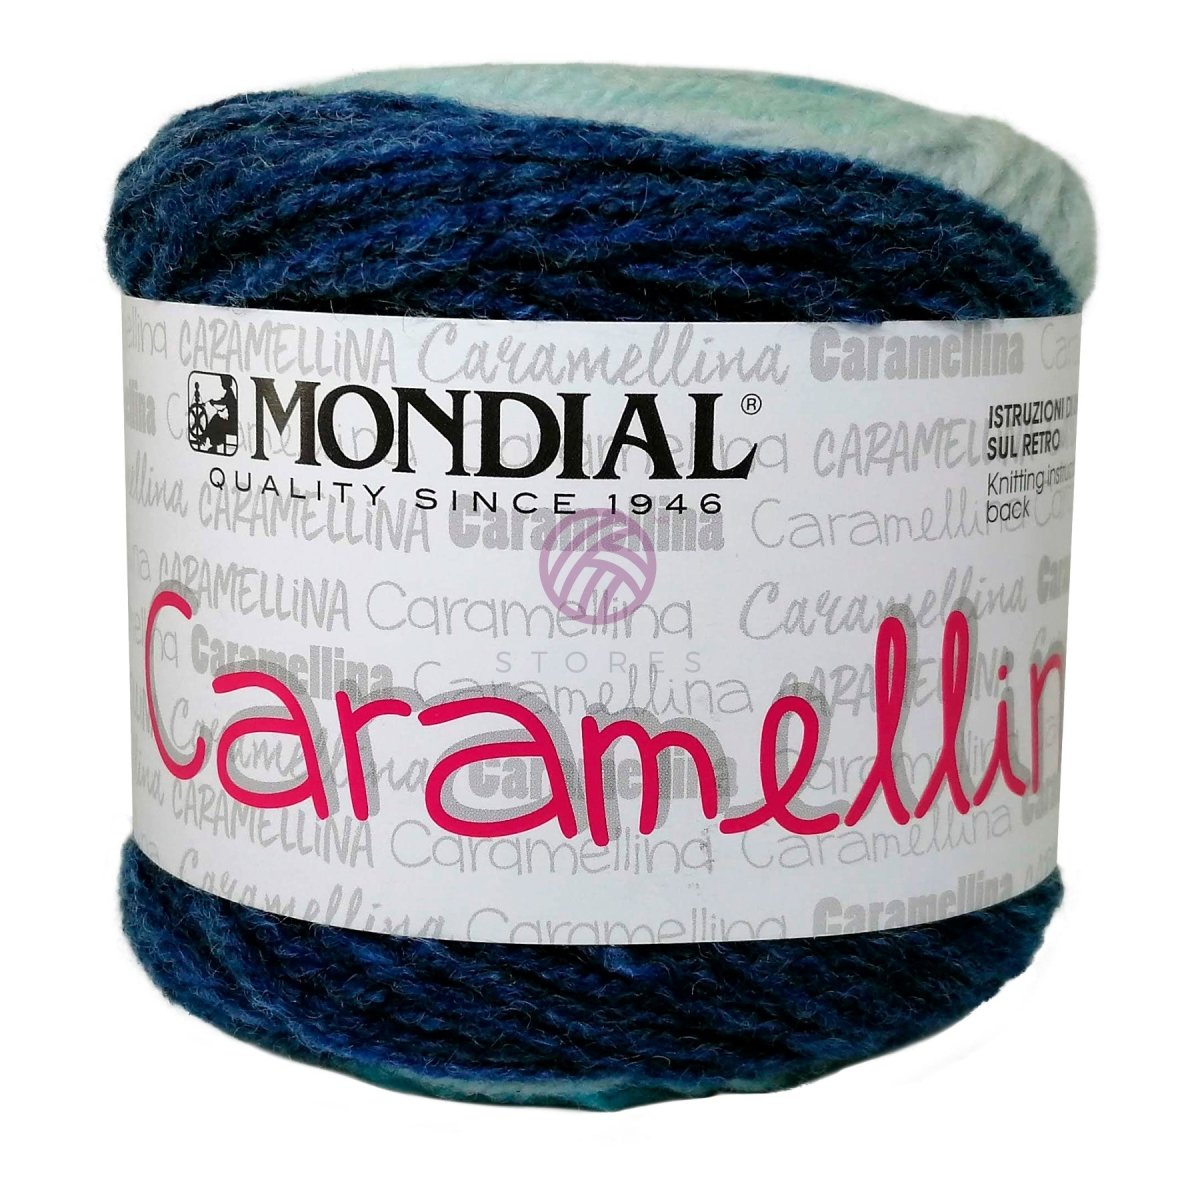 CARAMELLINA - Crochetstores12519158020586352876